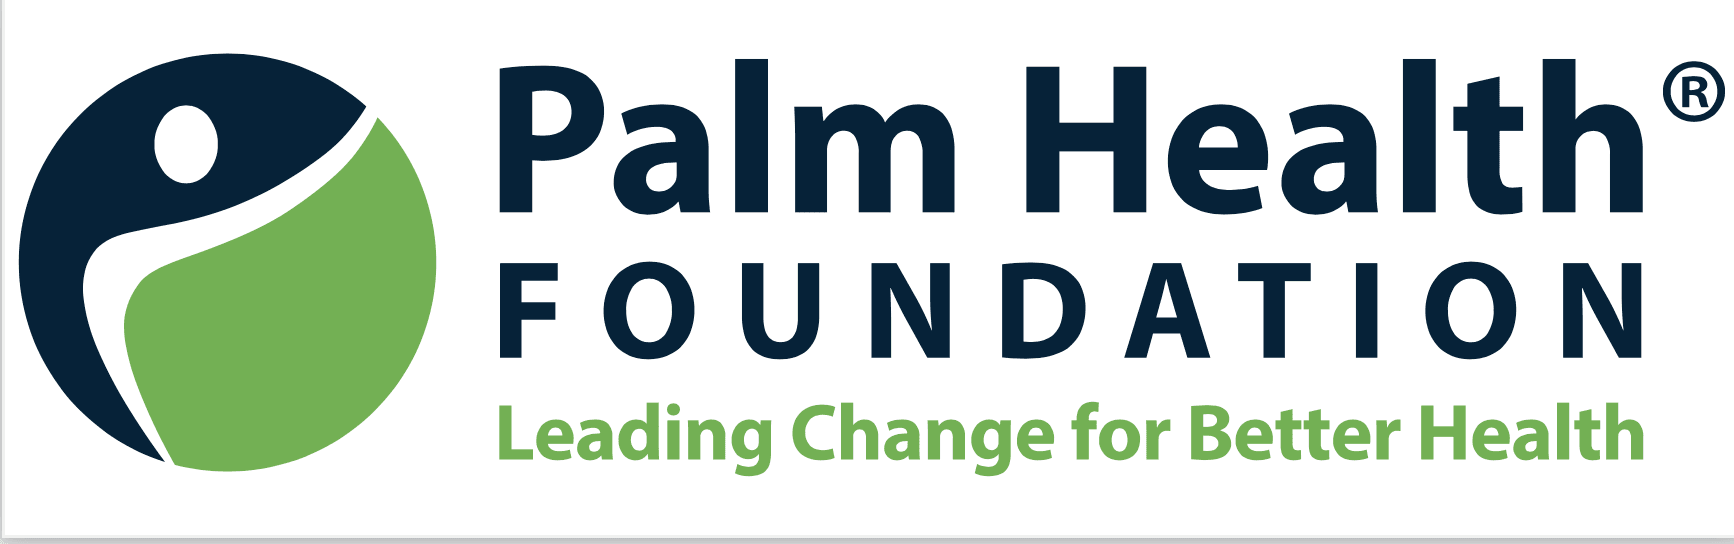 Palm Health Foundation 